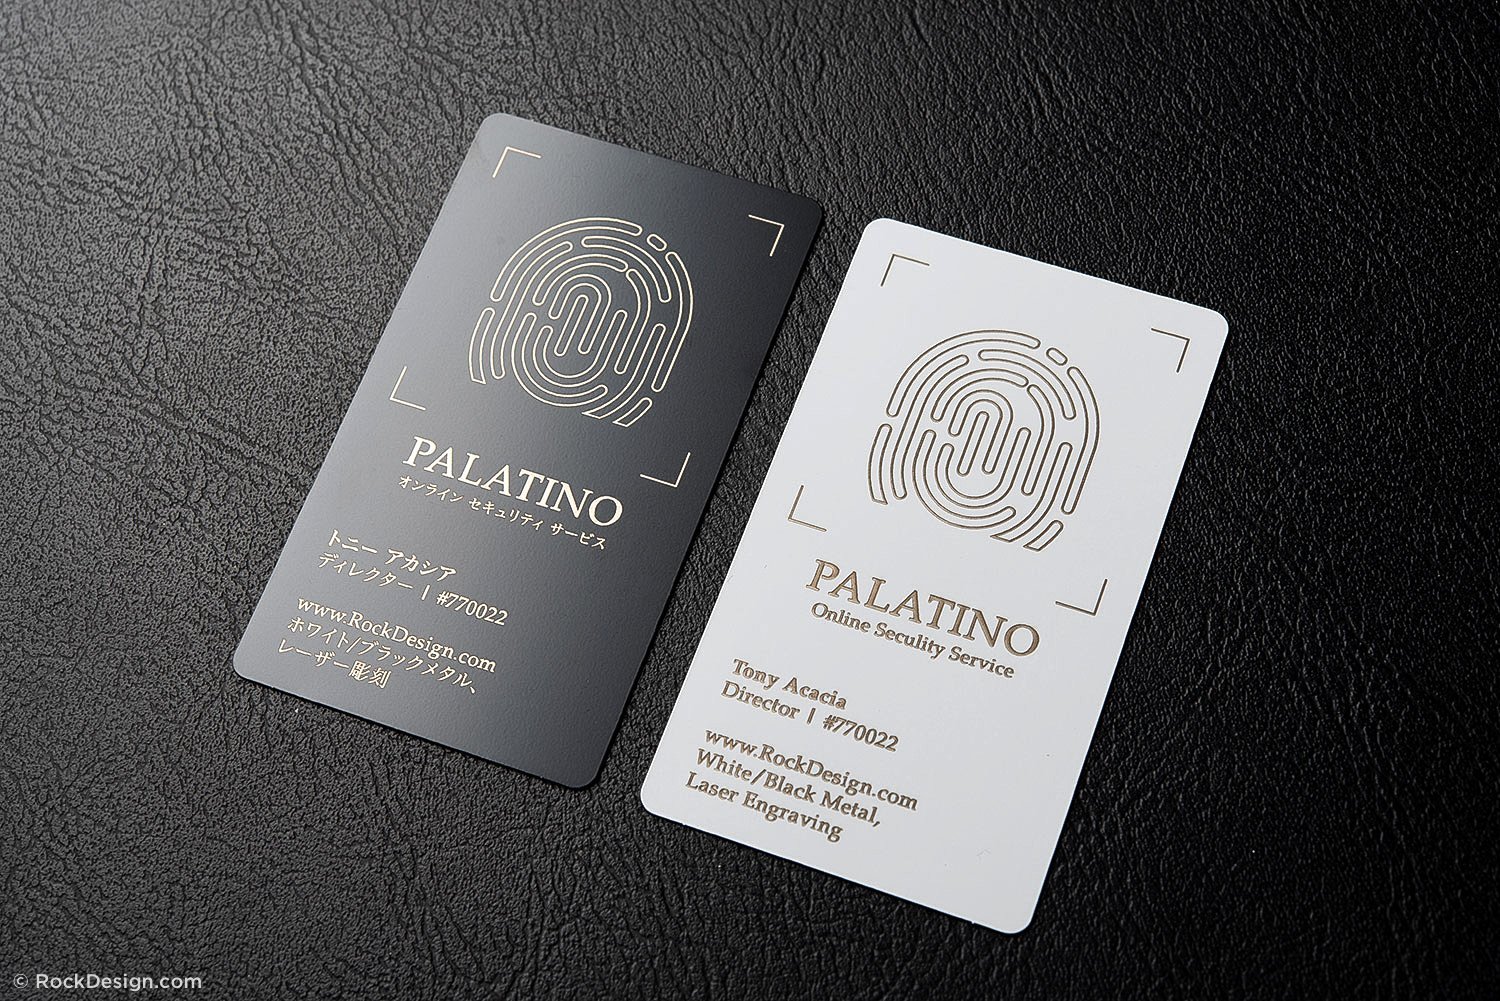 Black and White Business Cards Inspirational Unique Bilingual Black and White Business Card Template Palatino